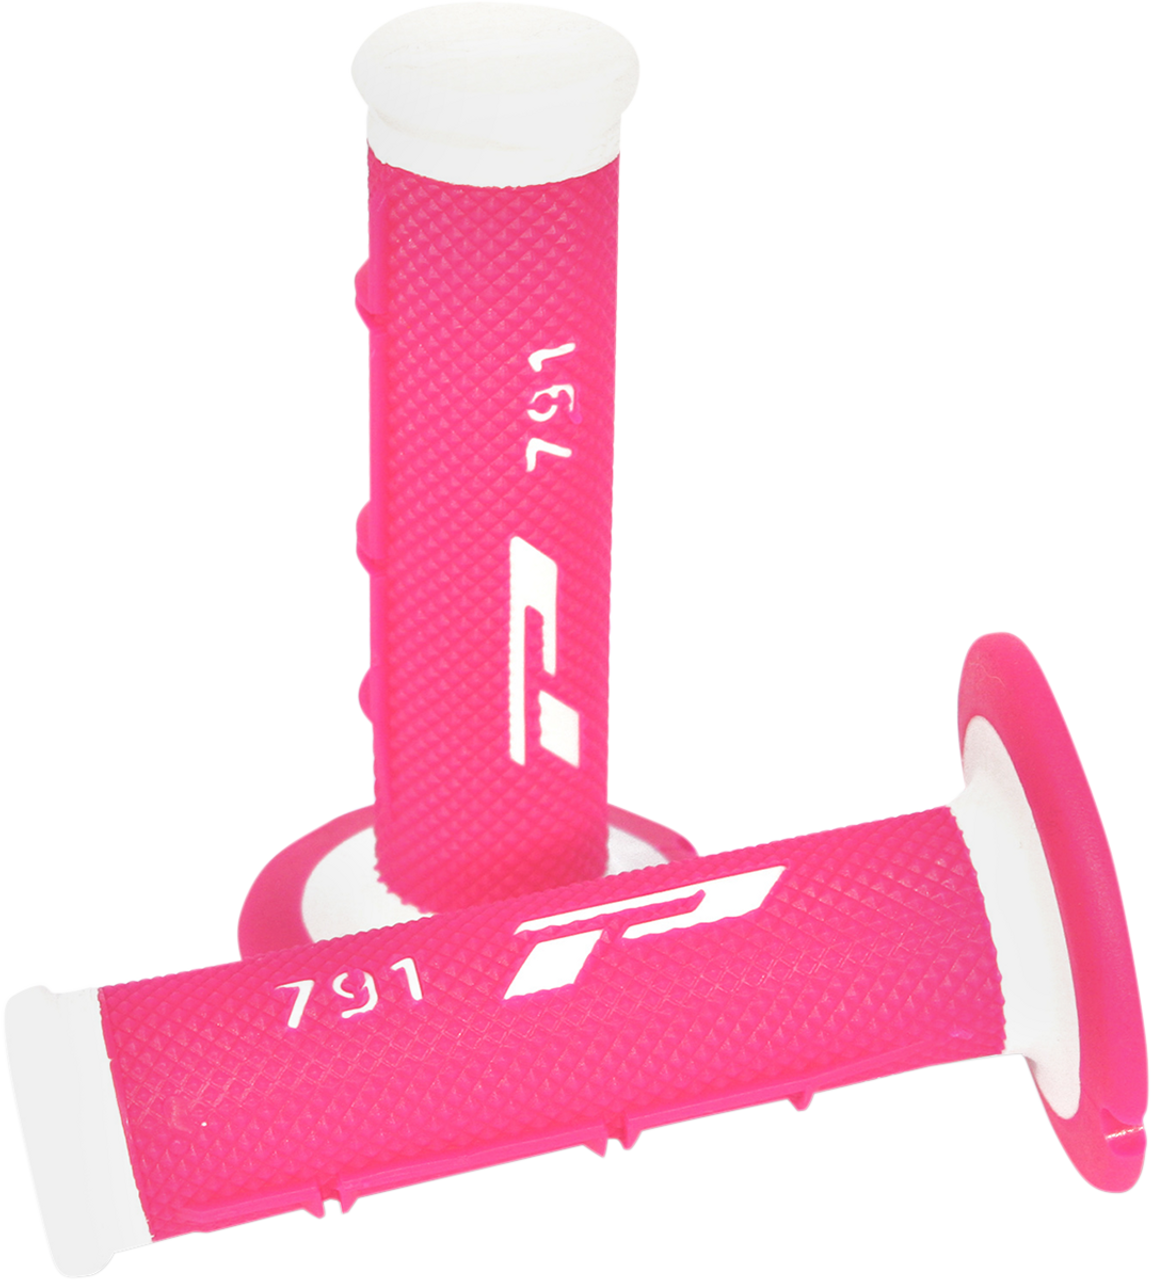 Grips - 791 - White/Fluorescent Pink